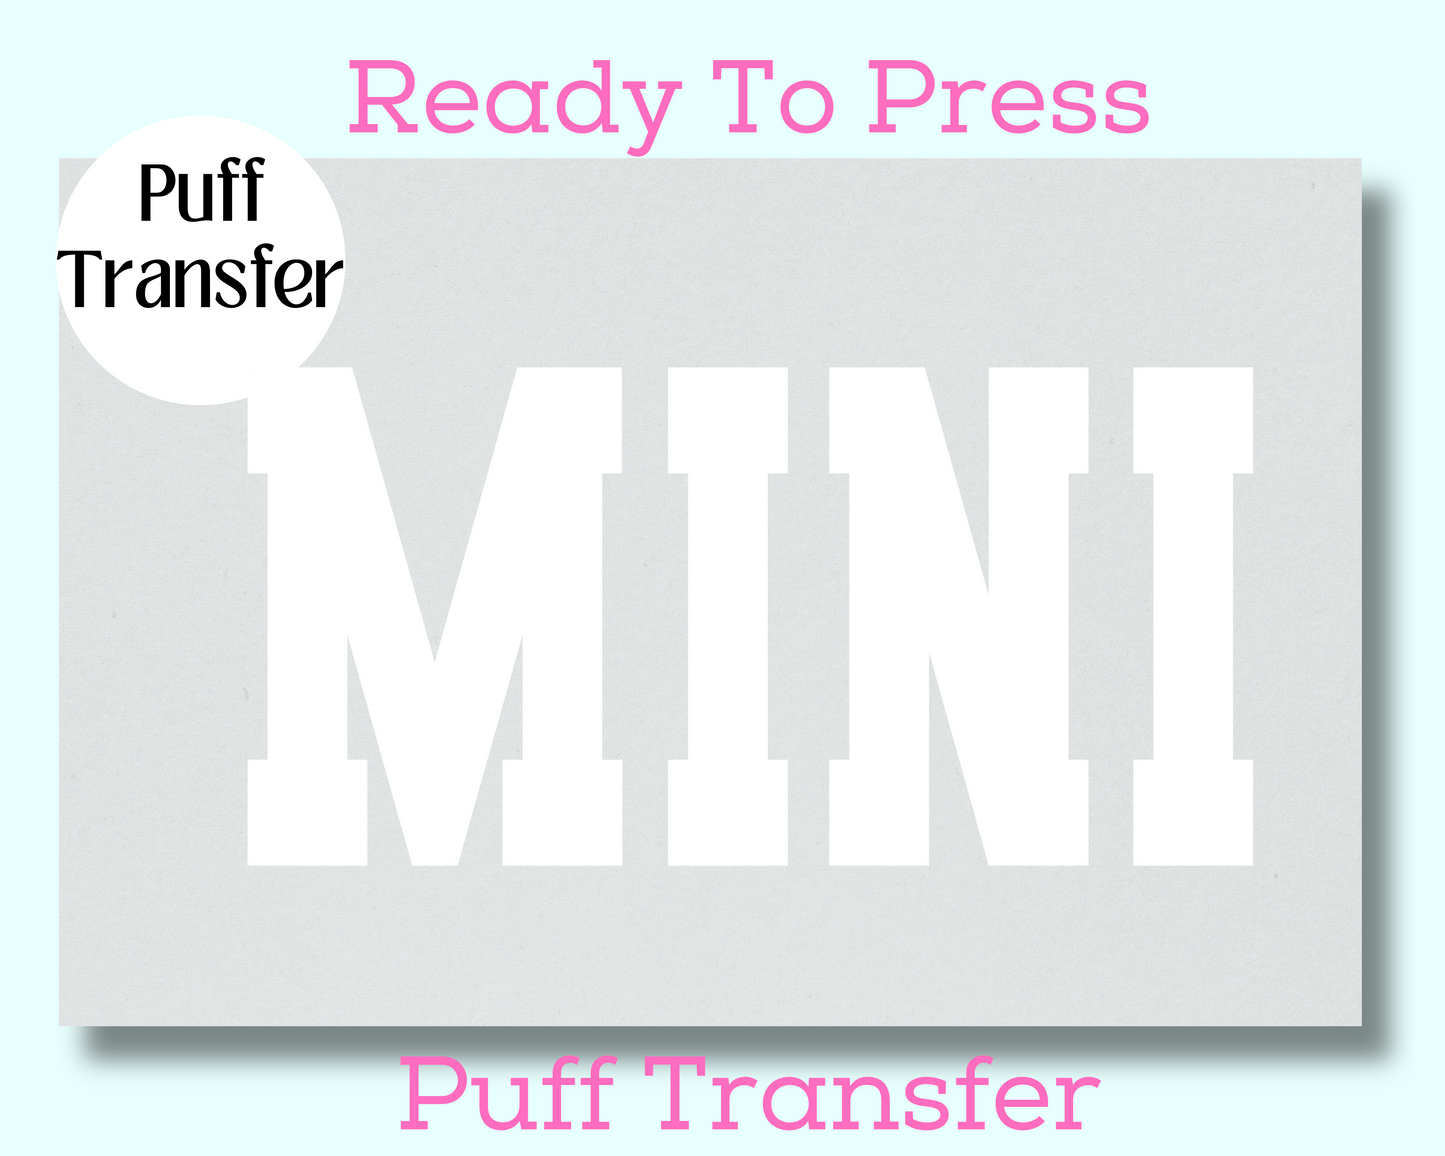 Mini (White) PUFF TRANSFER